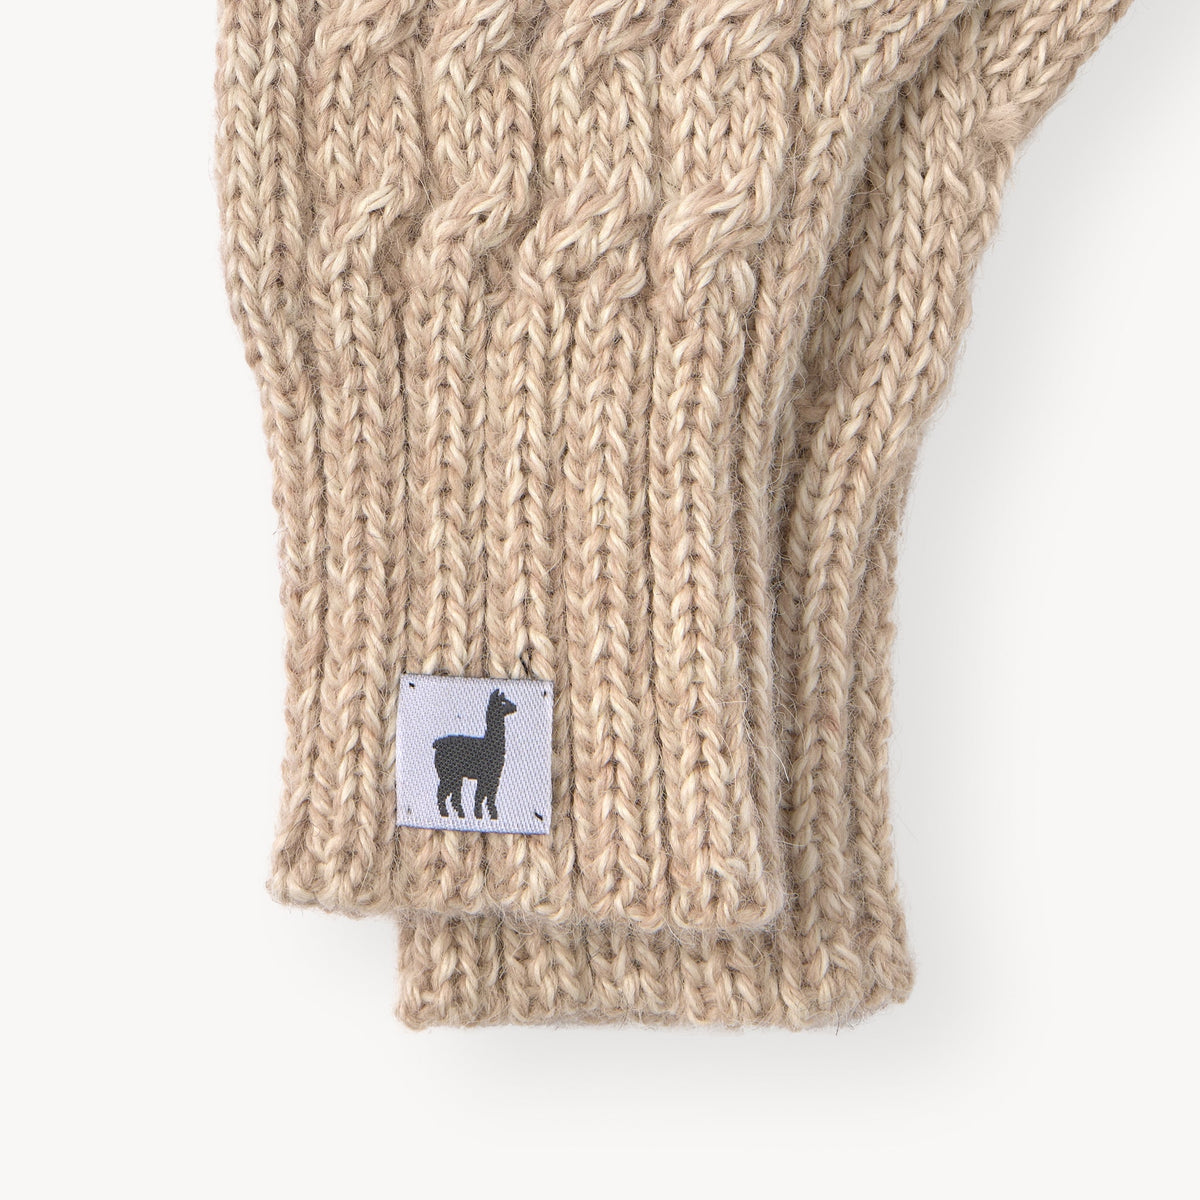 Hand-Knit Alpaca Gloves by POKOLOKO